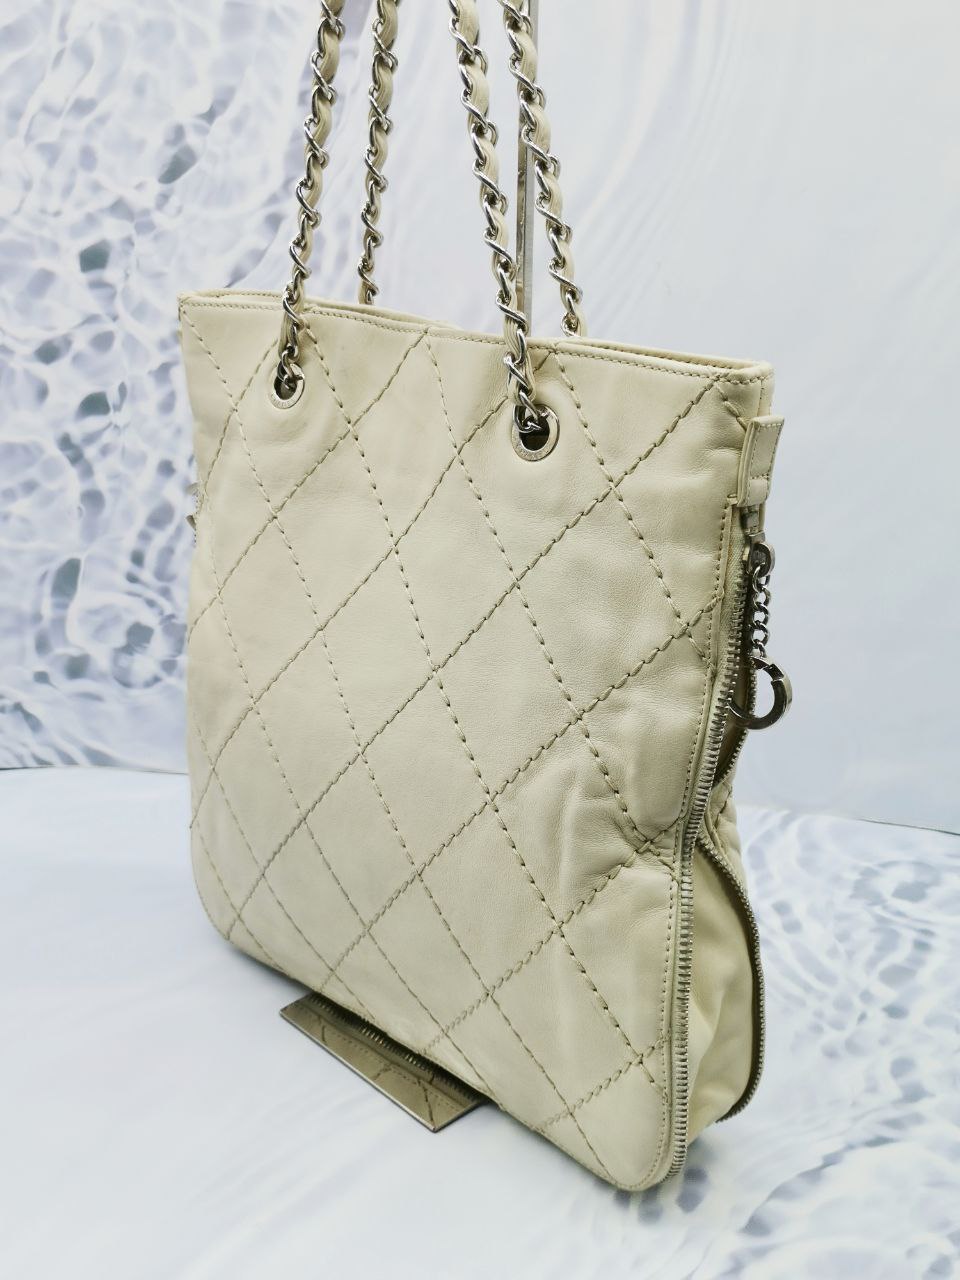 Chanel Silver Chain Shoulder Bag